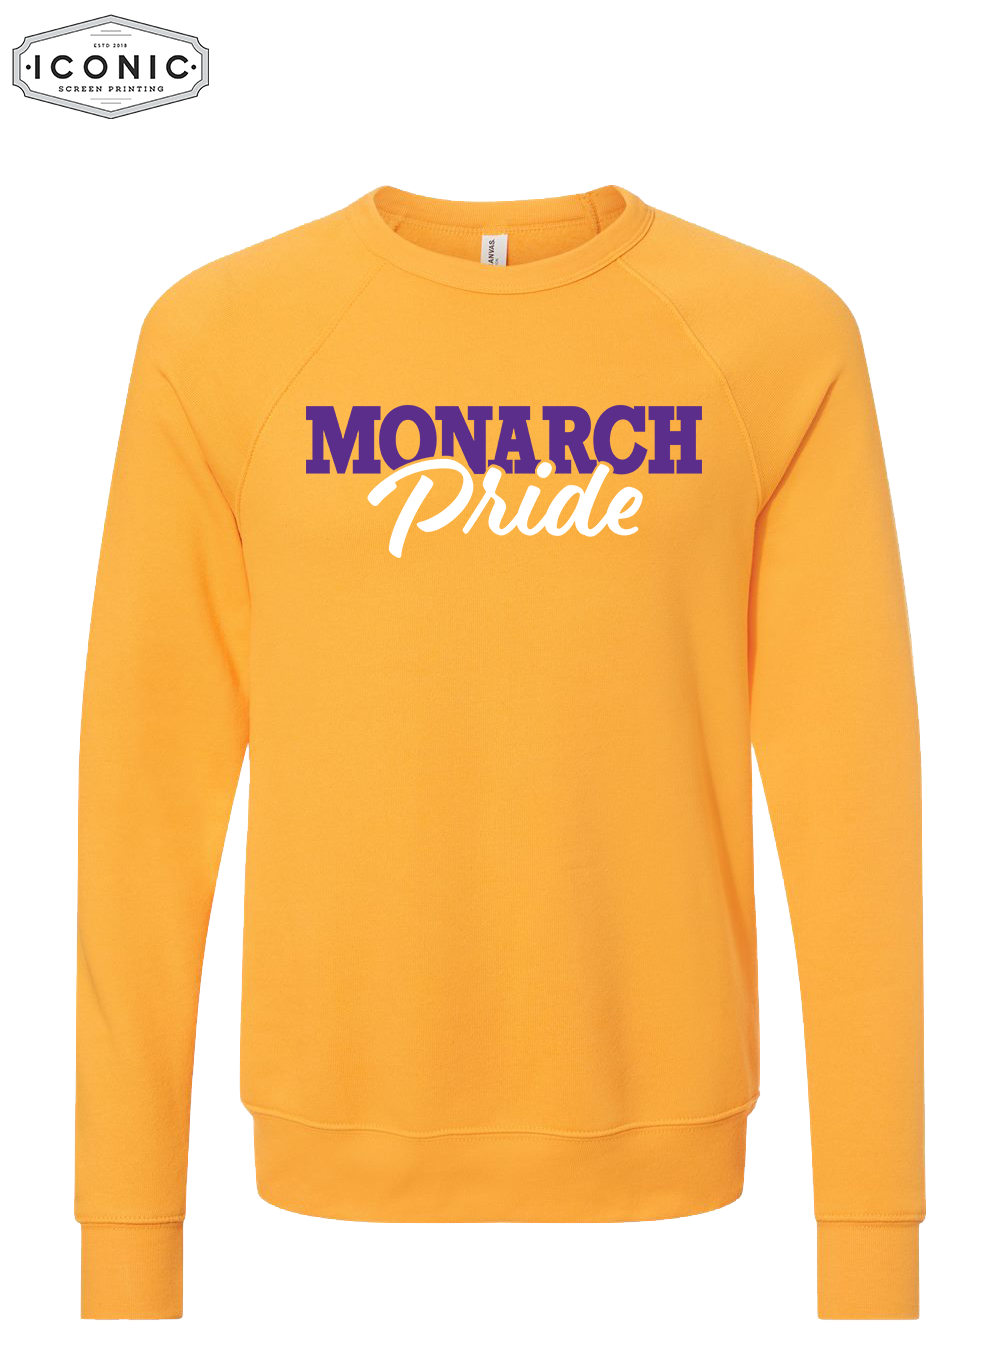 Monarch Pride - Unisex Sponge Fleece Raglan Crewneck Sweatshirt